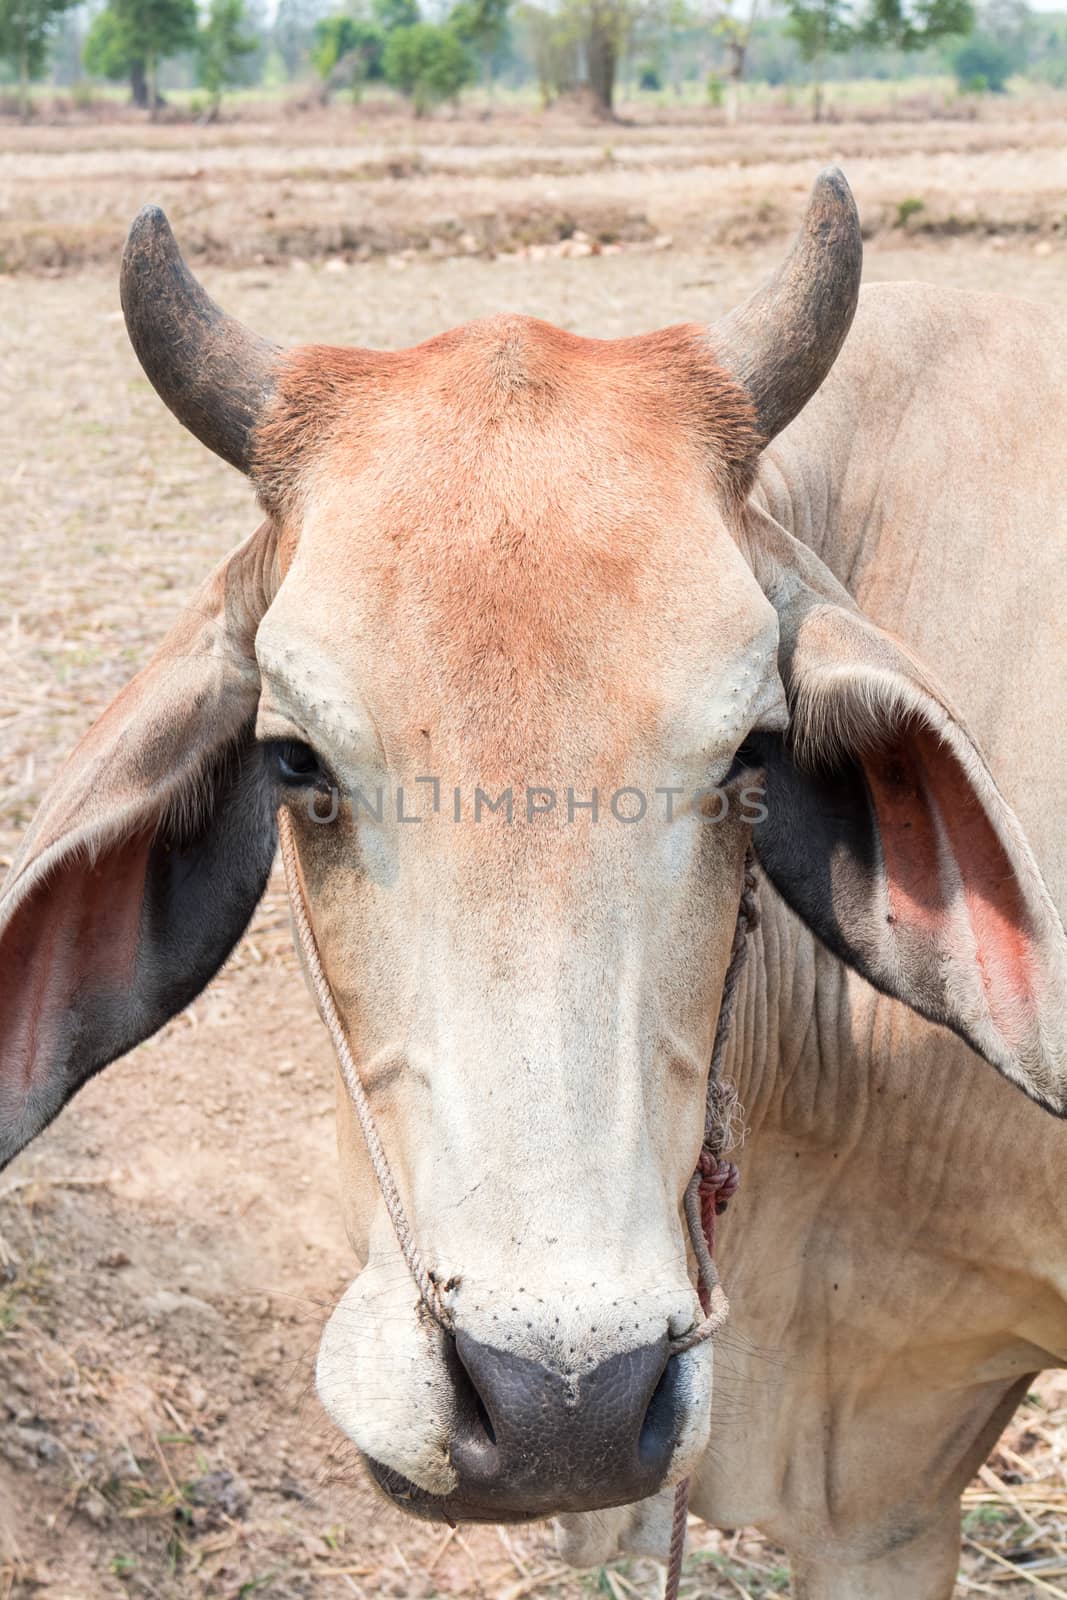 Closeup face cow by pt.pongsak@gmail.com